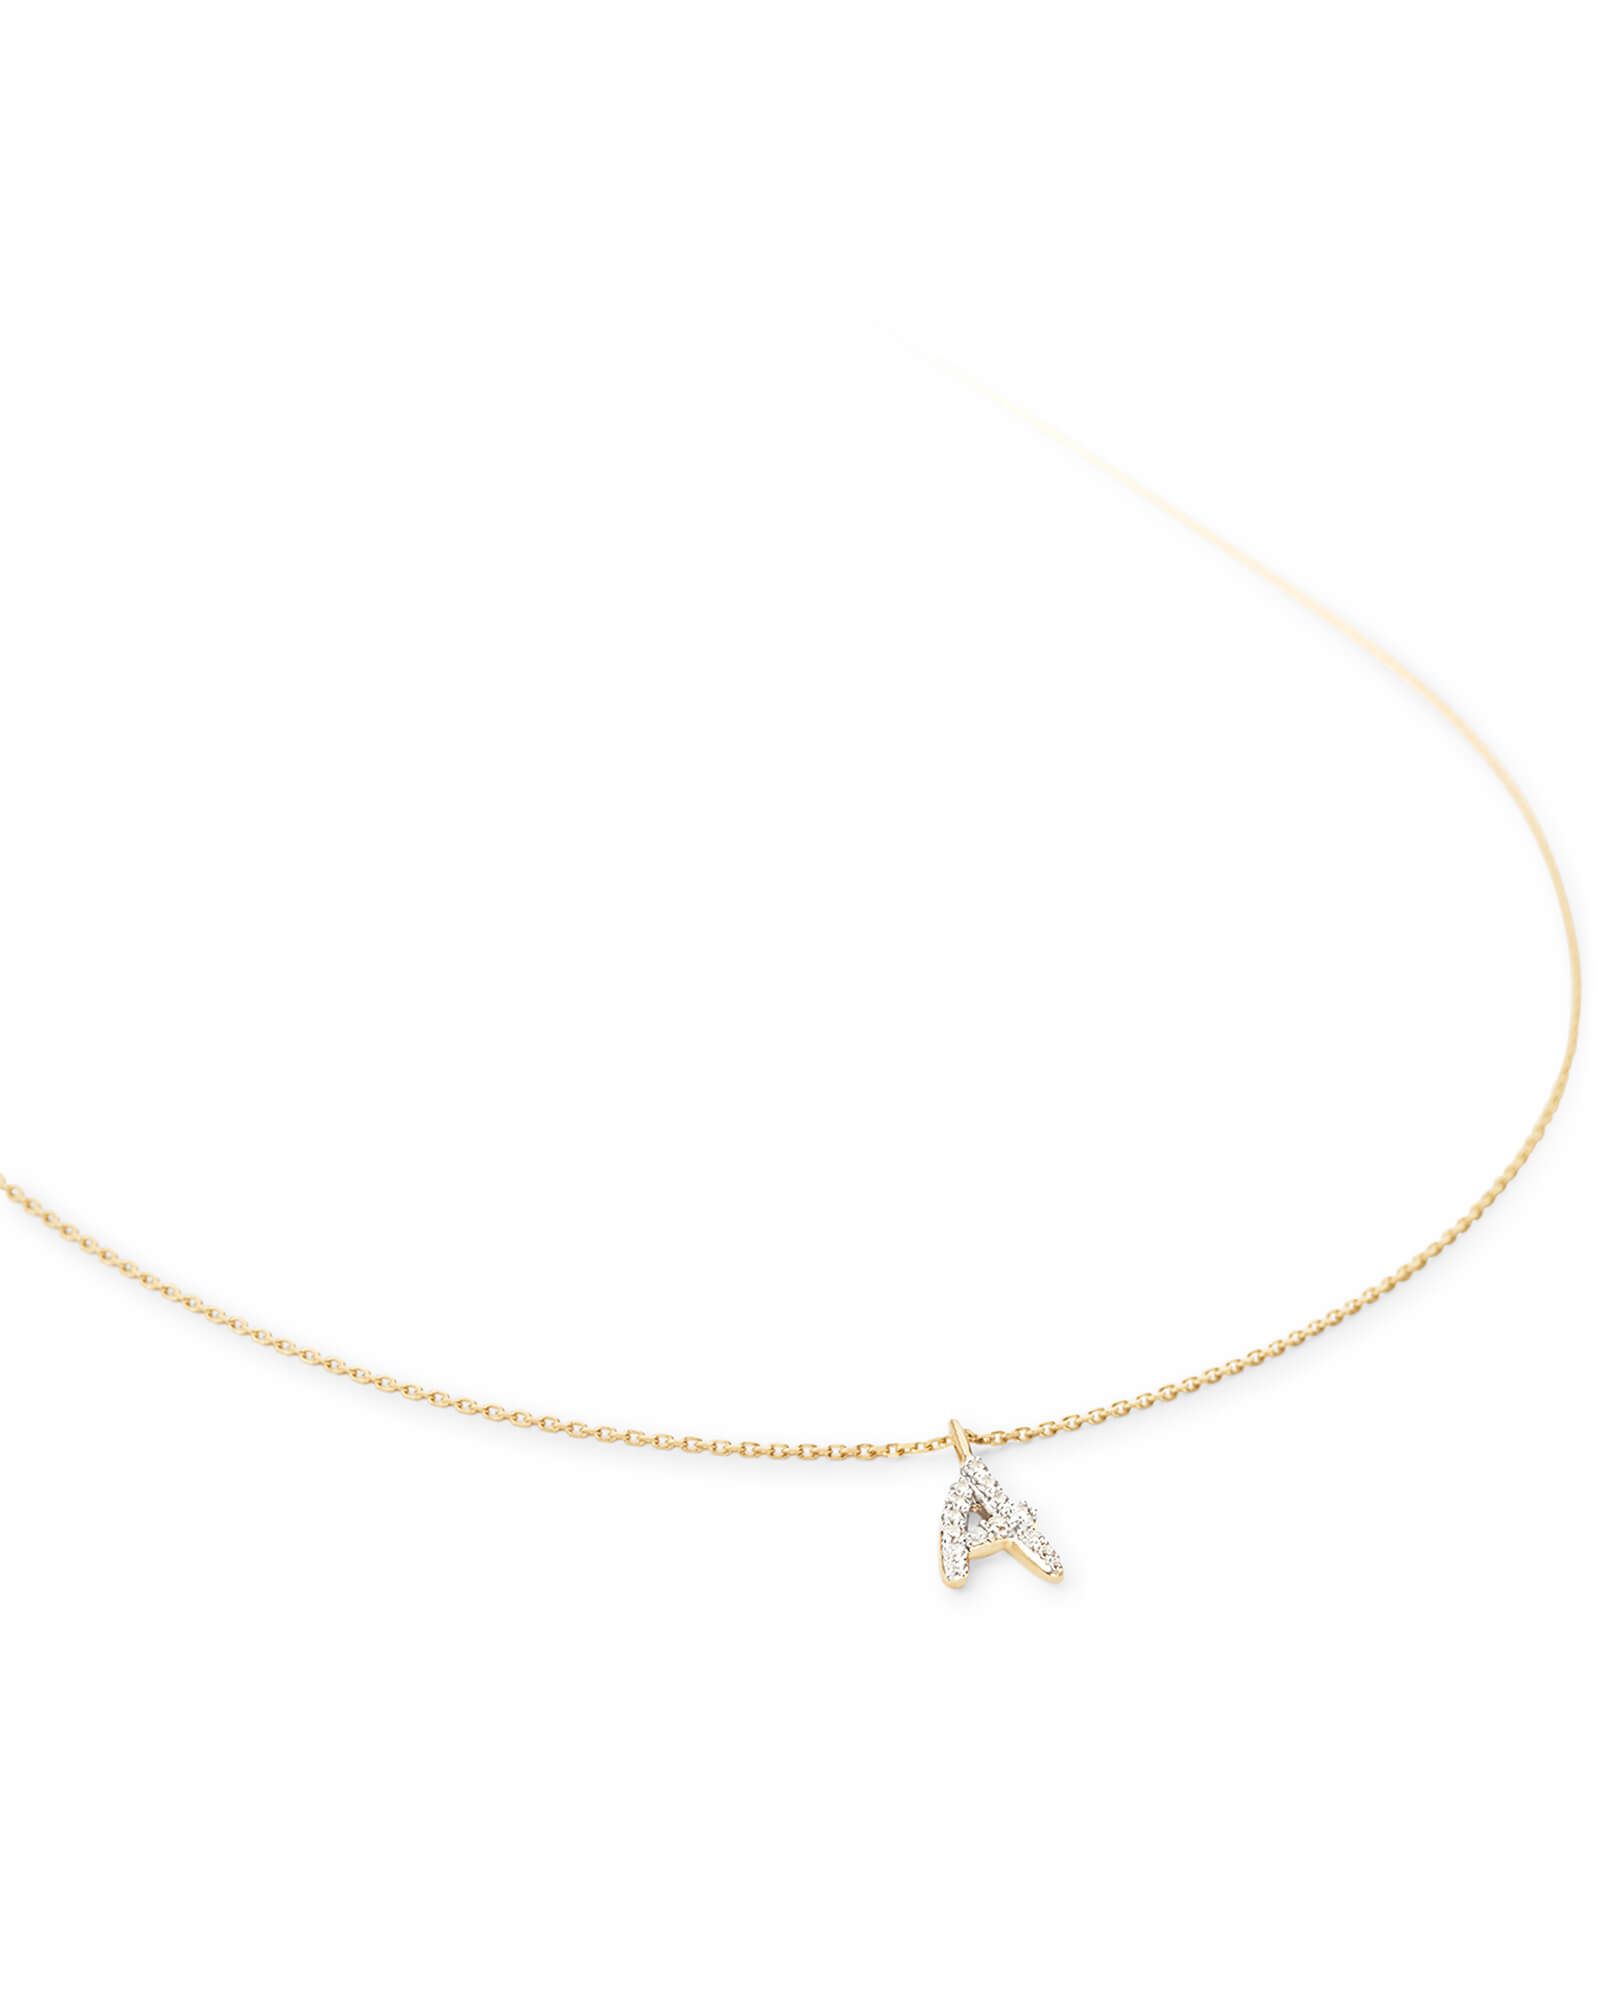 Diamond Letter A Pendant Necklace in 14k Yellow Gold | Kendra Scott | Kendra Scott